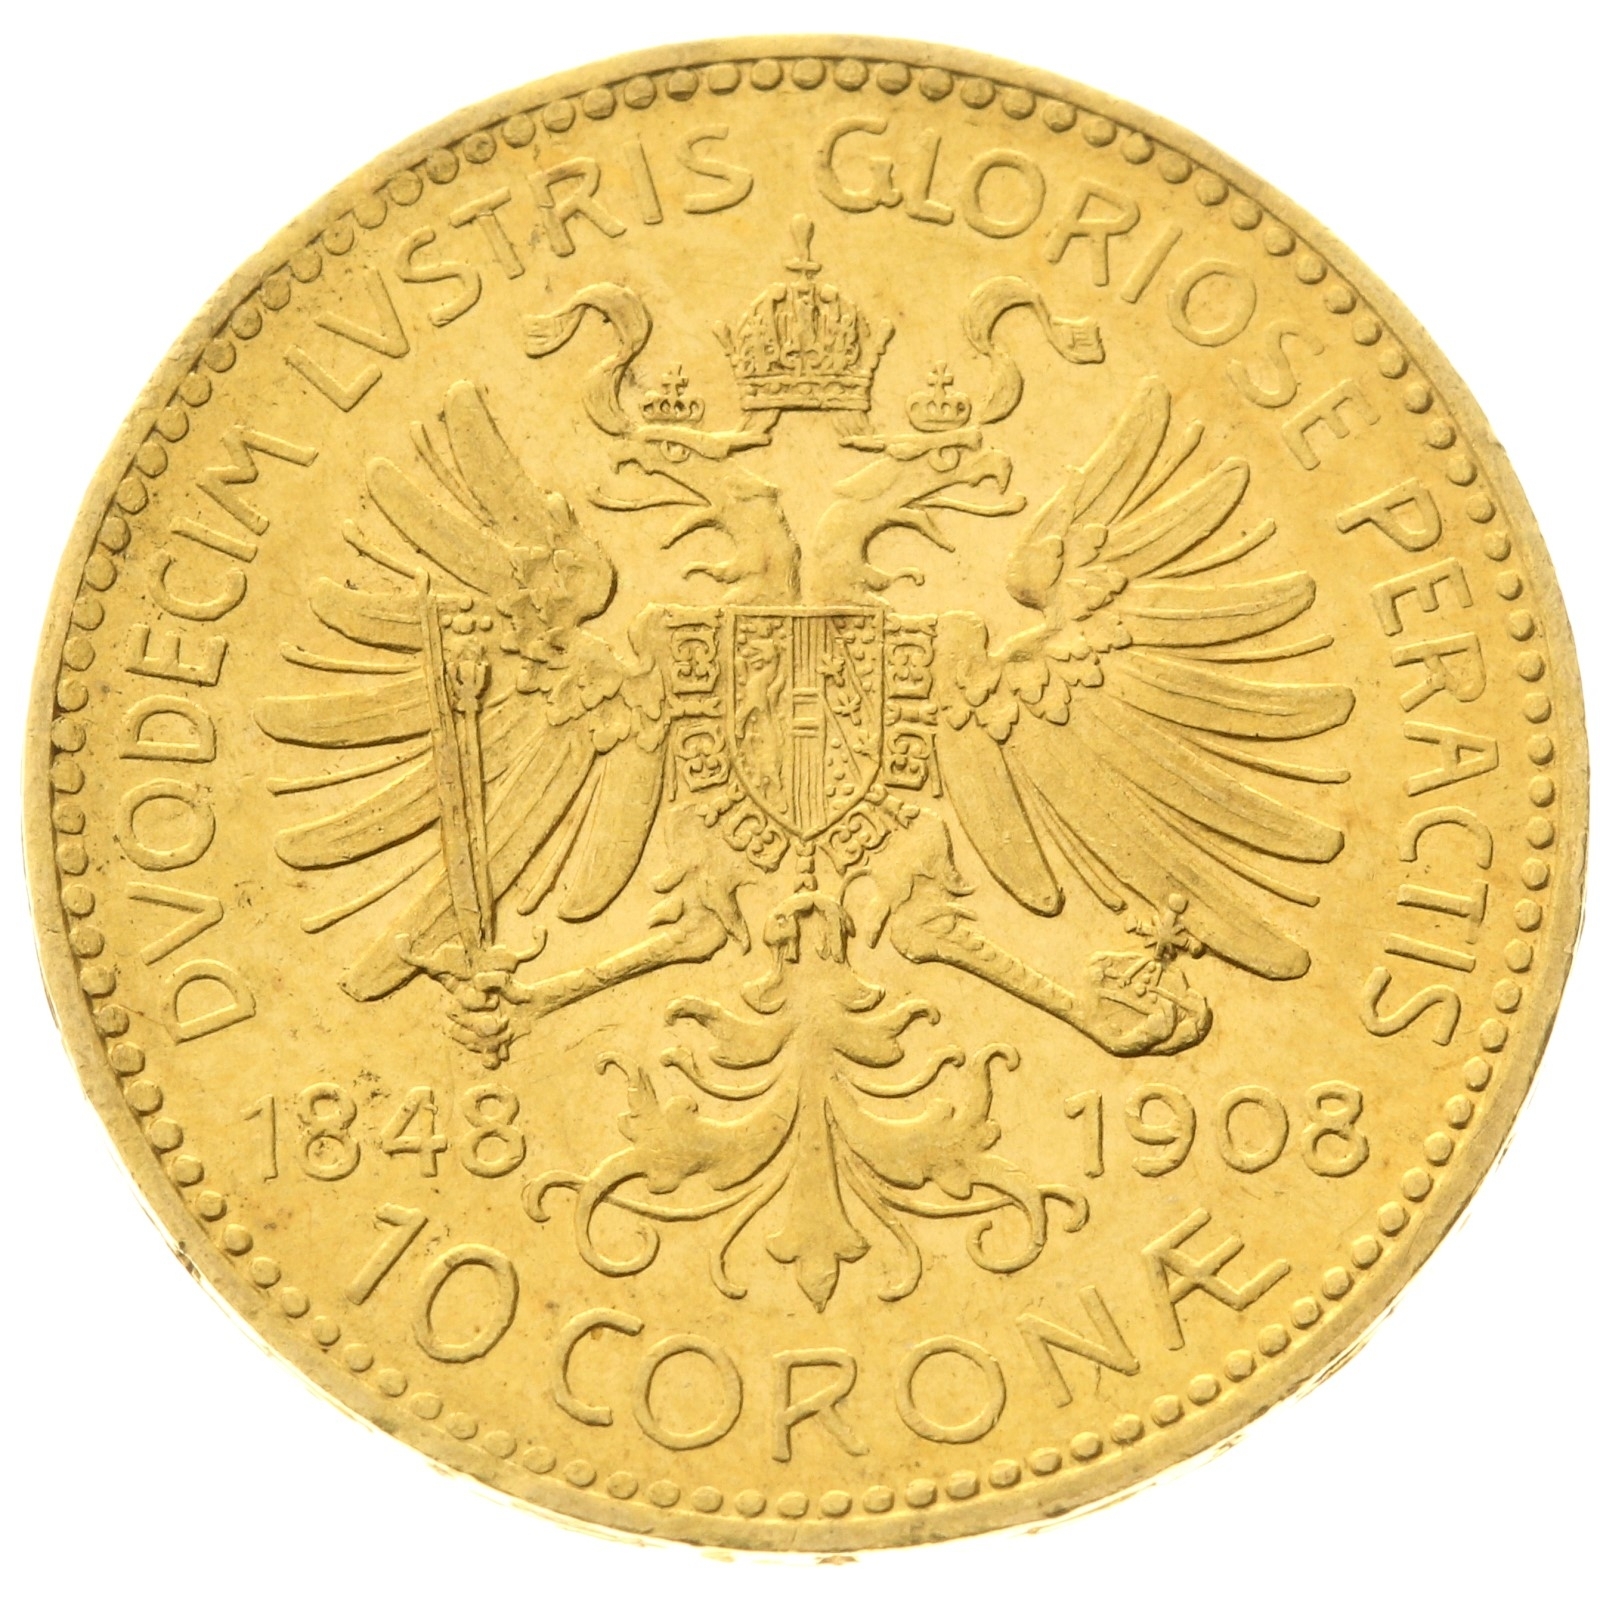 Austria - 10 Corona - 1908 - Franz Joseph I - Reign